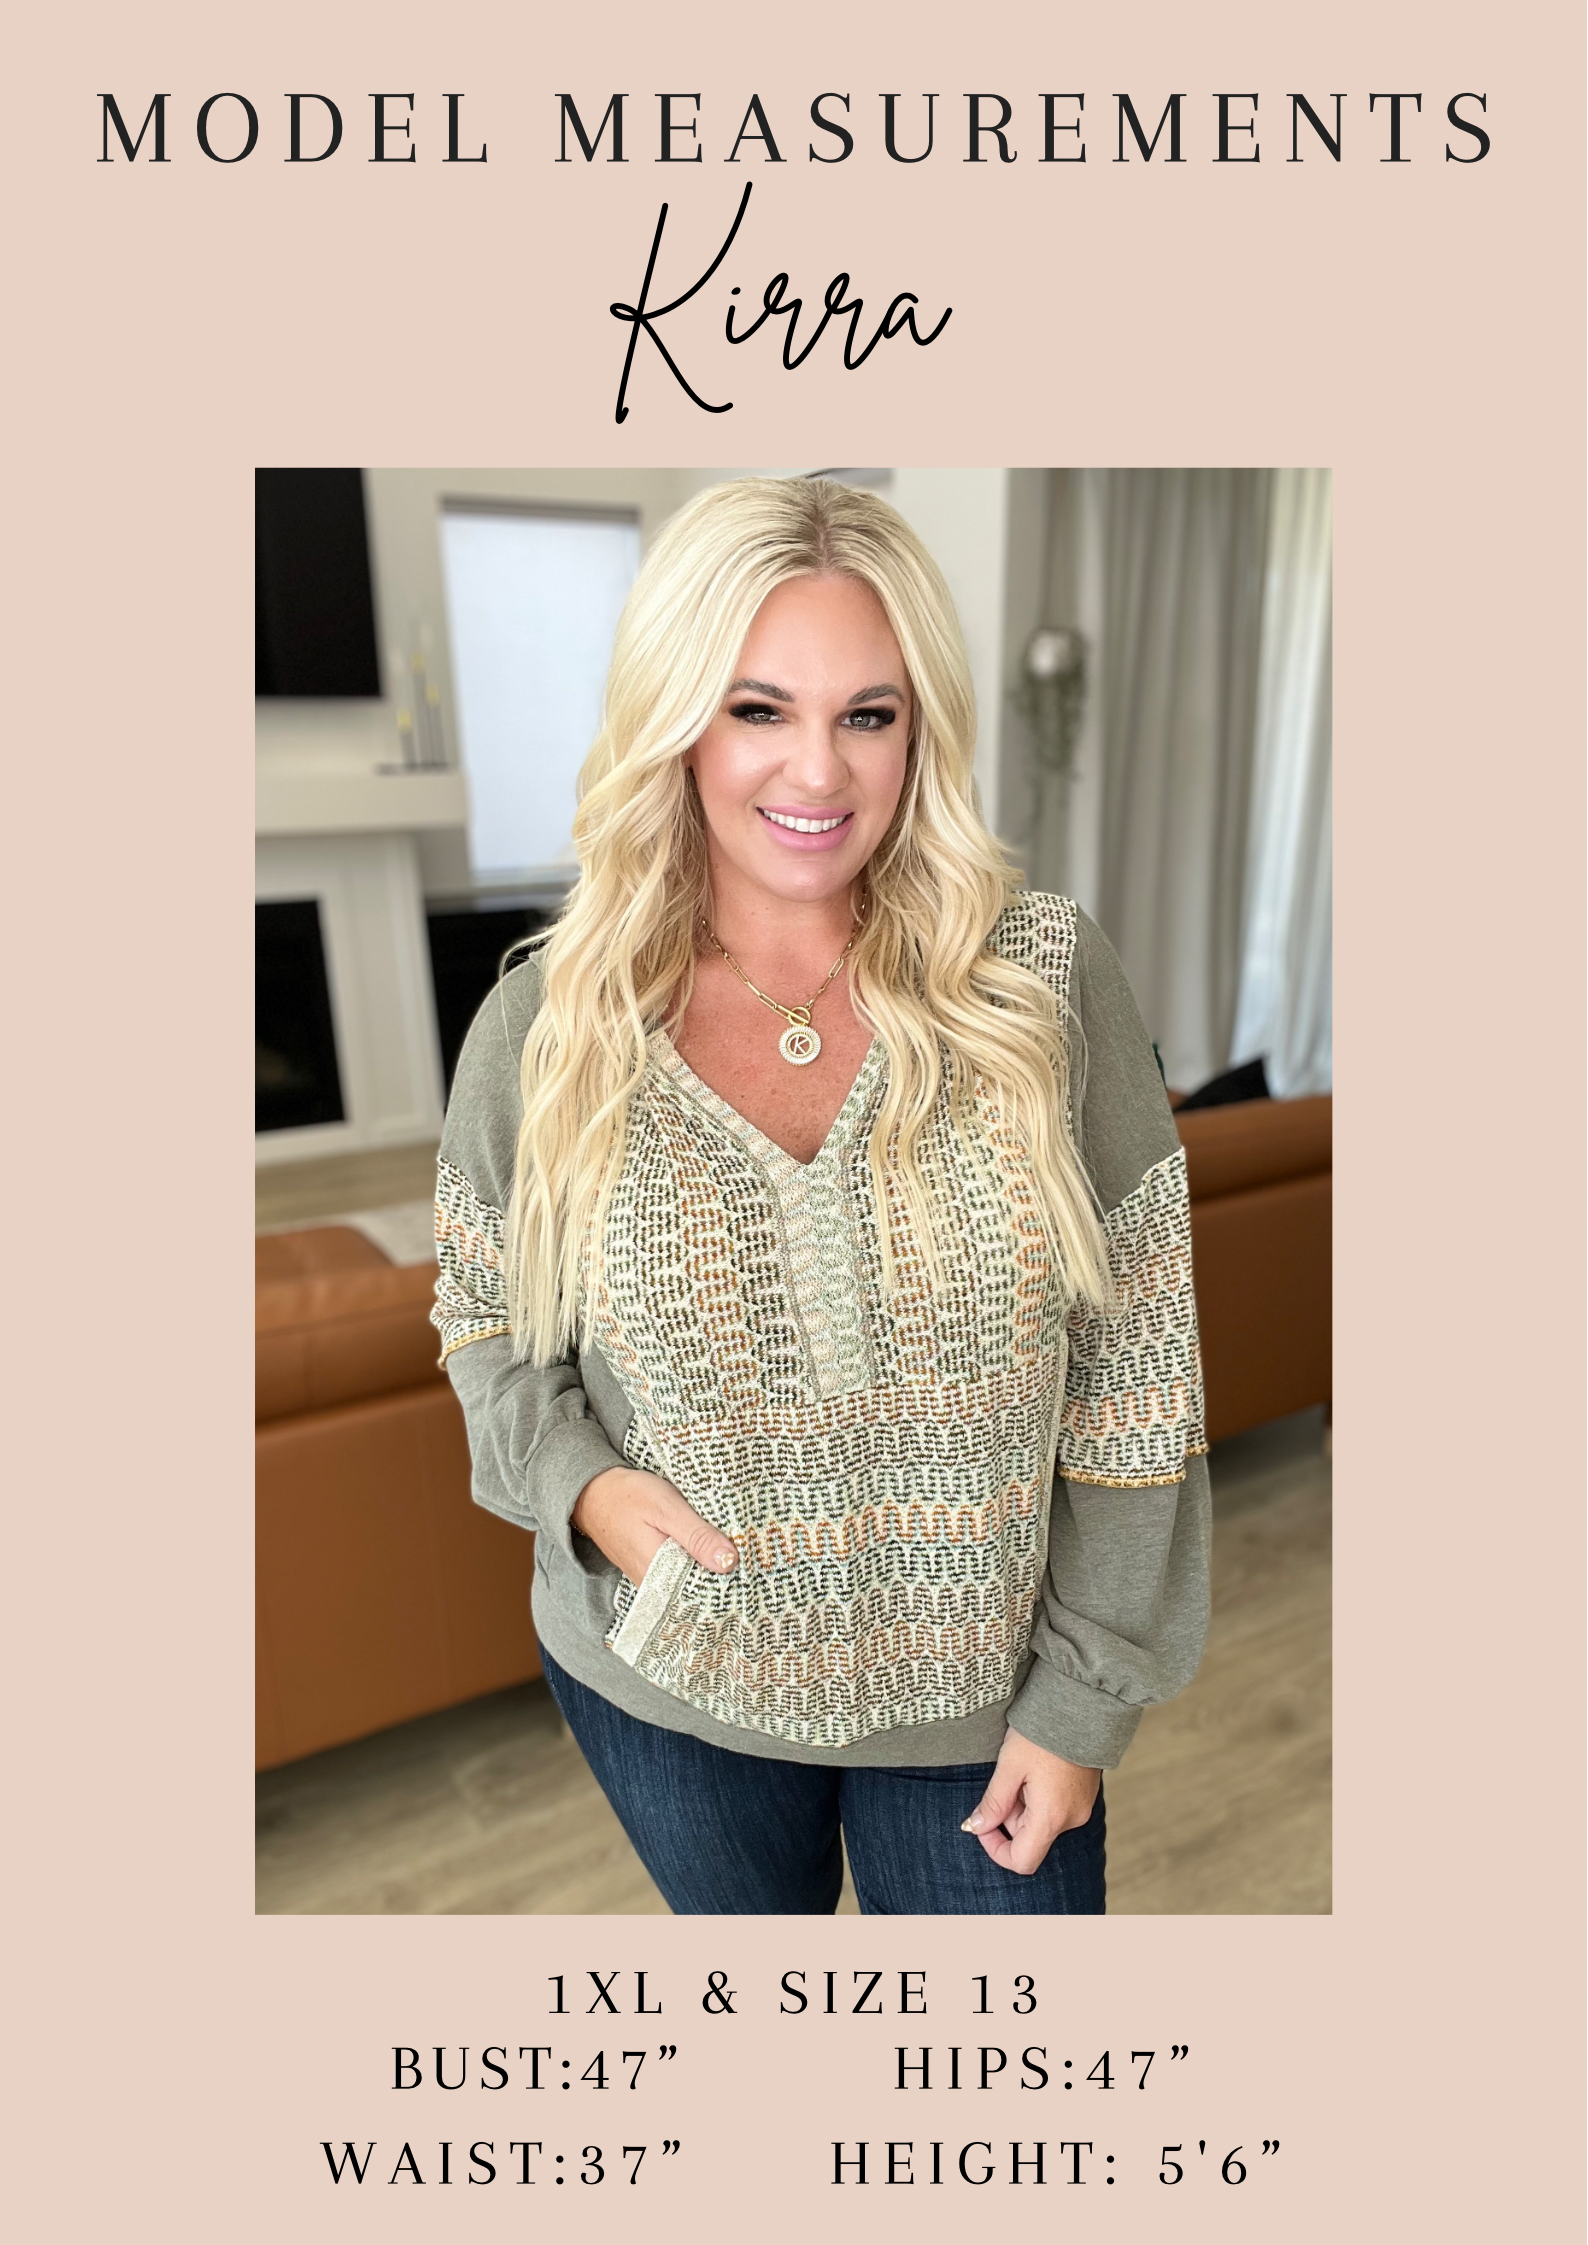 Friend Of A Friend Loose Knit Striped Sweater-Sweaters-Krush Kandy, Women's Online Fashion Boutique Located in Phoenix, Arizona (Scottsdale Area)